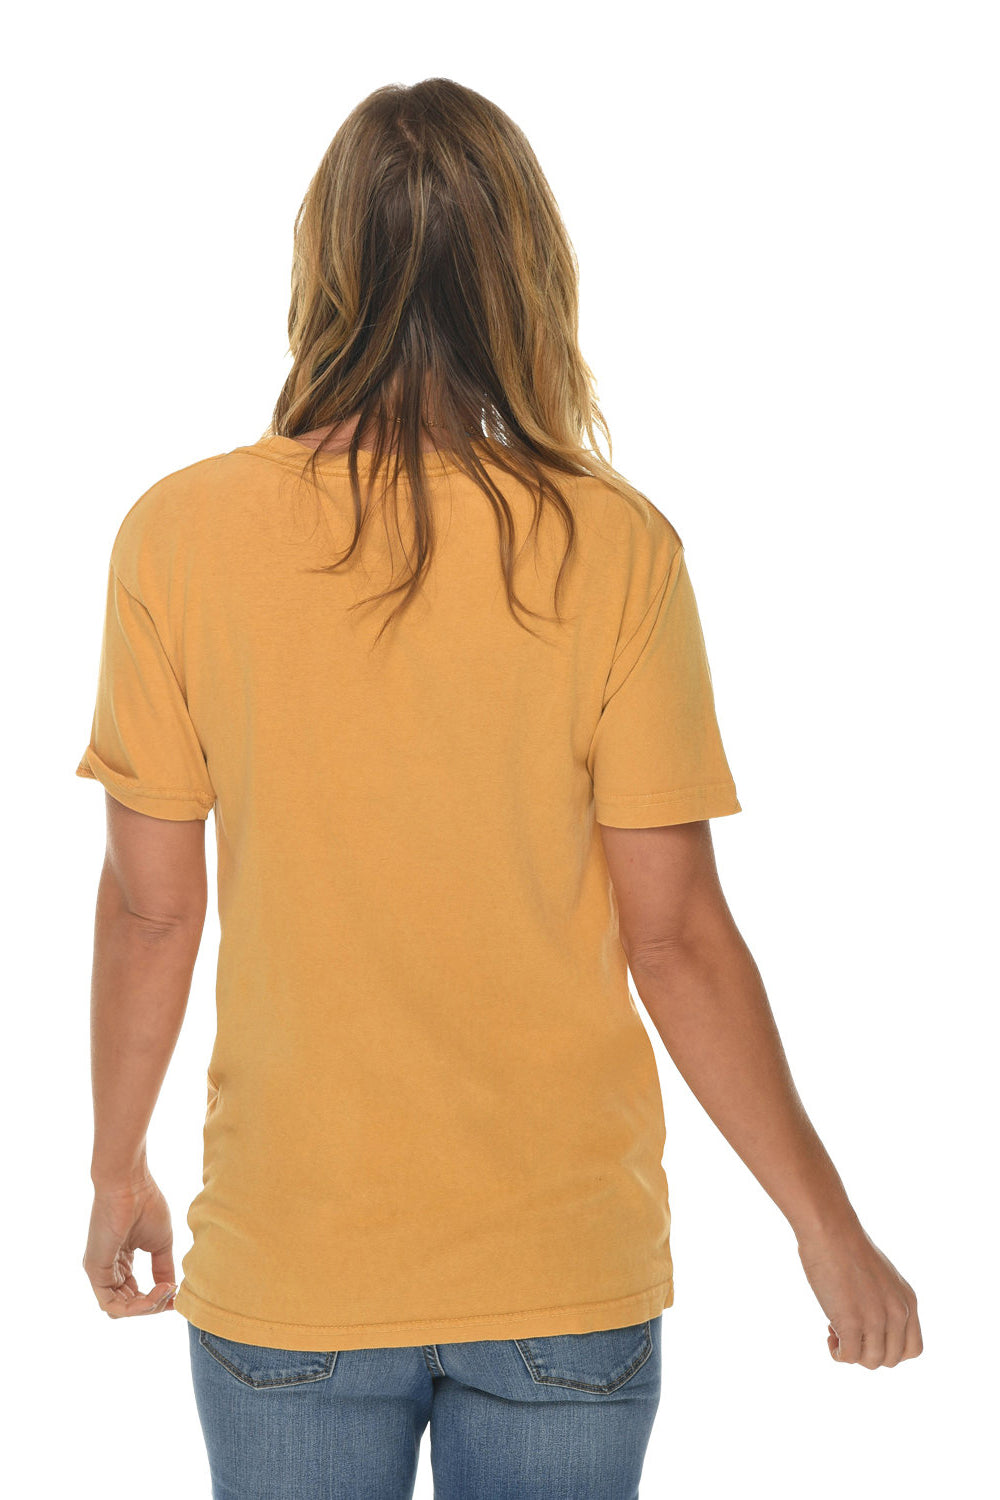 Lane Seven LST002 Mens Vintage Short Sleeve Crewneck T-Shirt Vintage Mustard Yellow Back